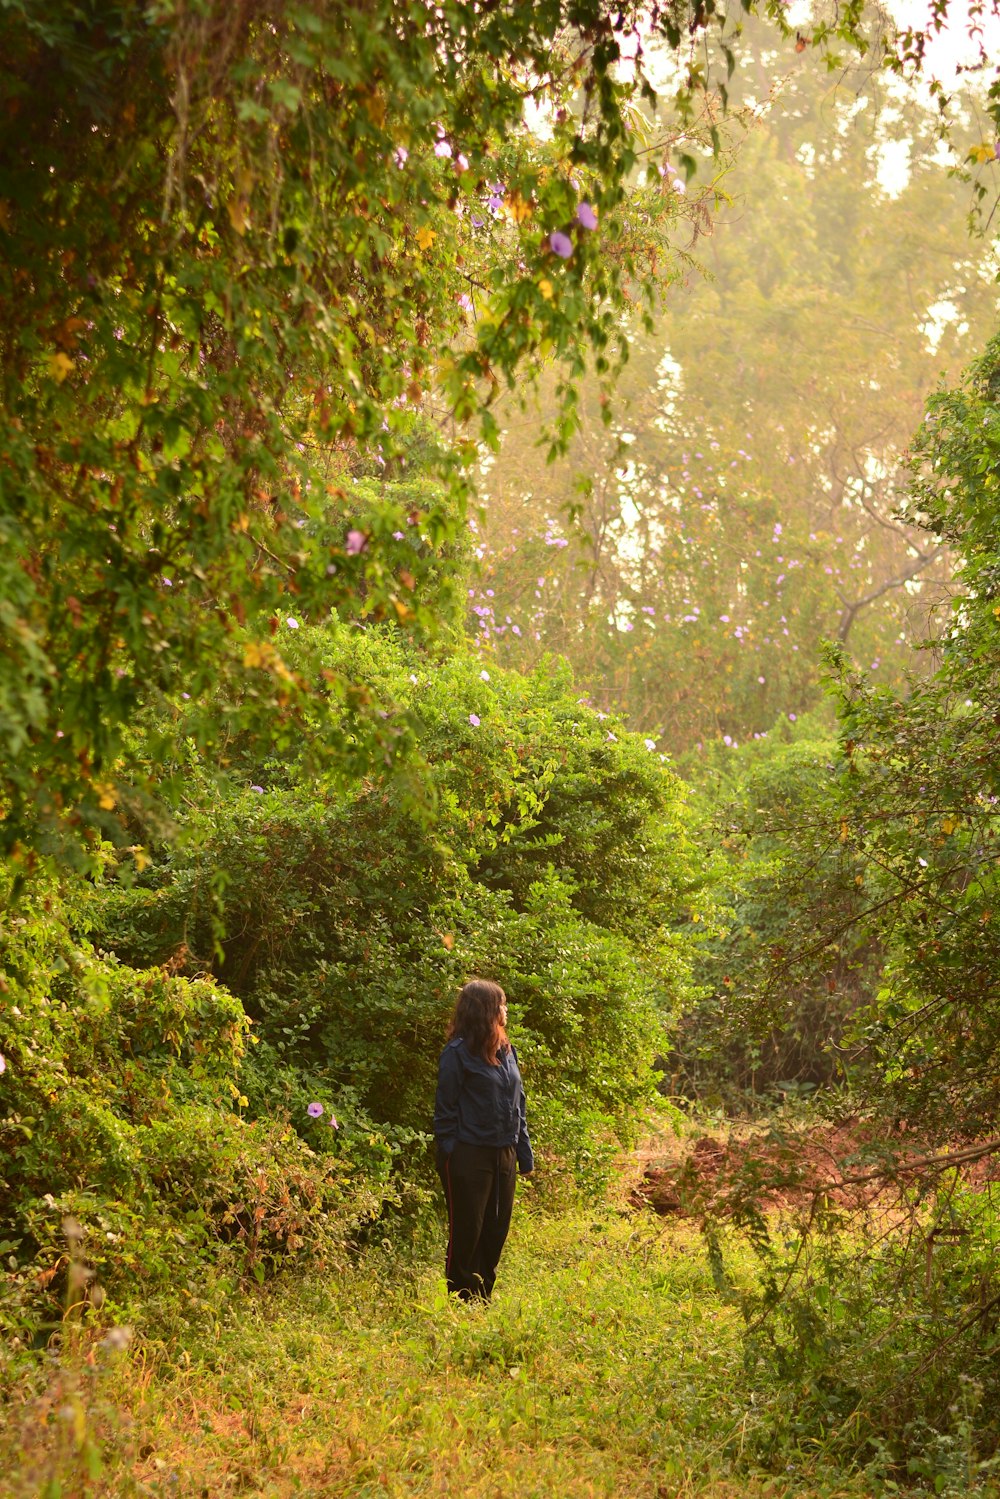 una persona in piedi in una foresta